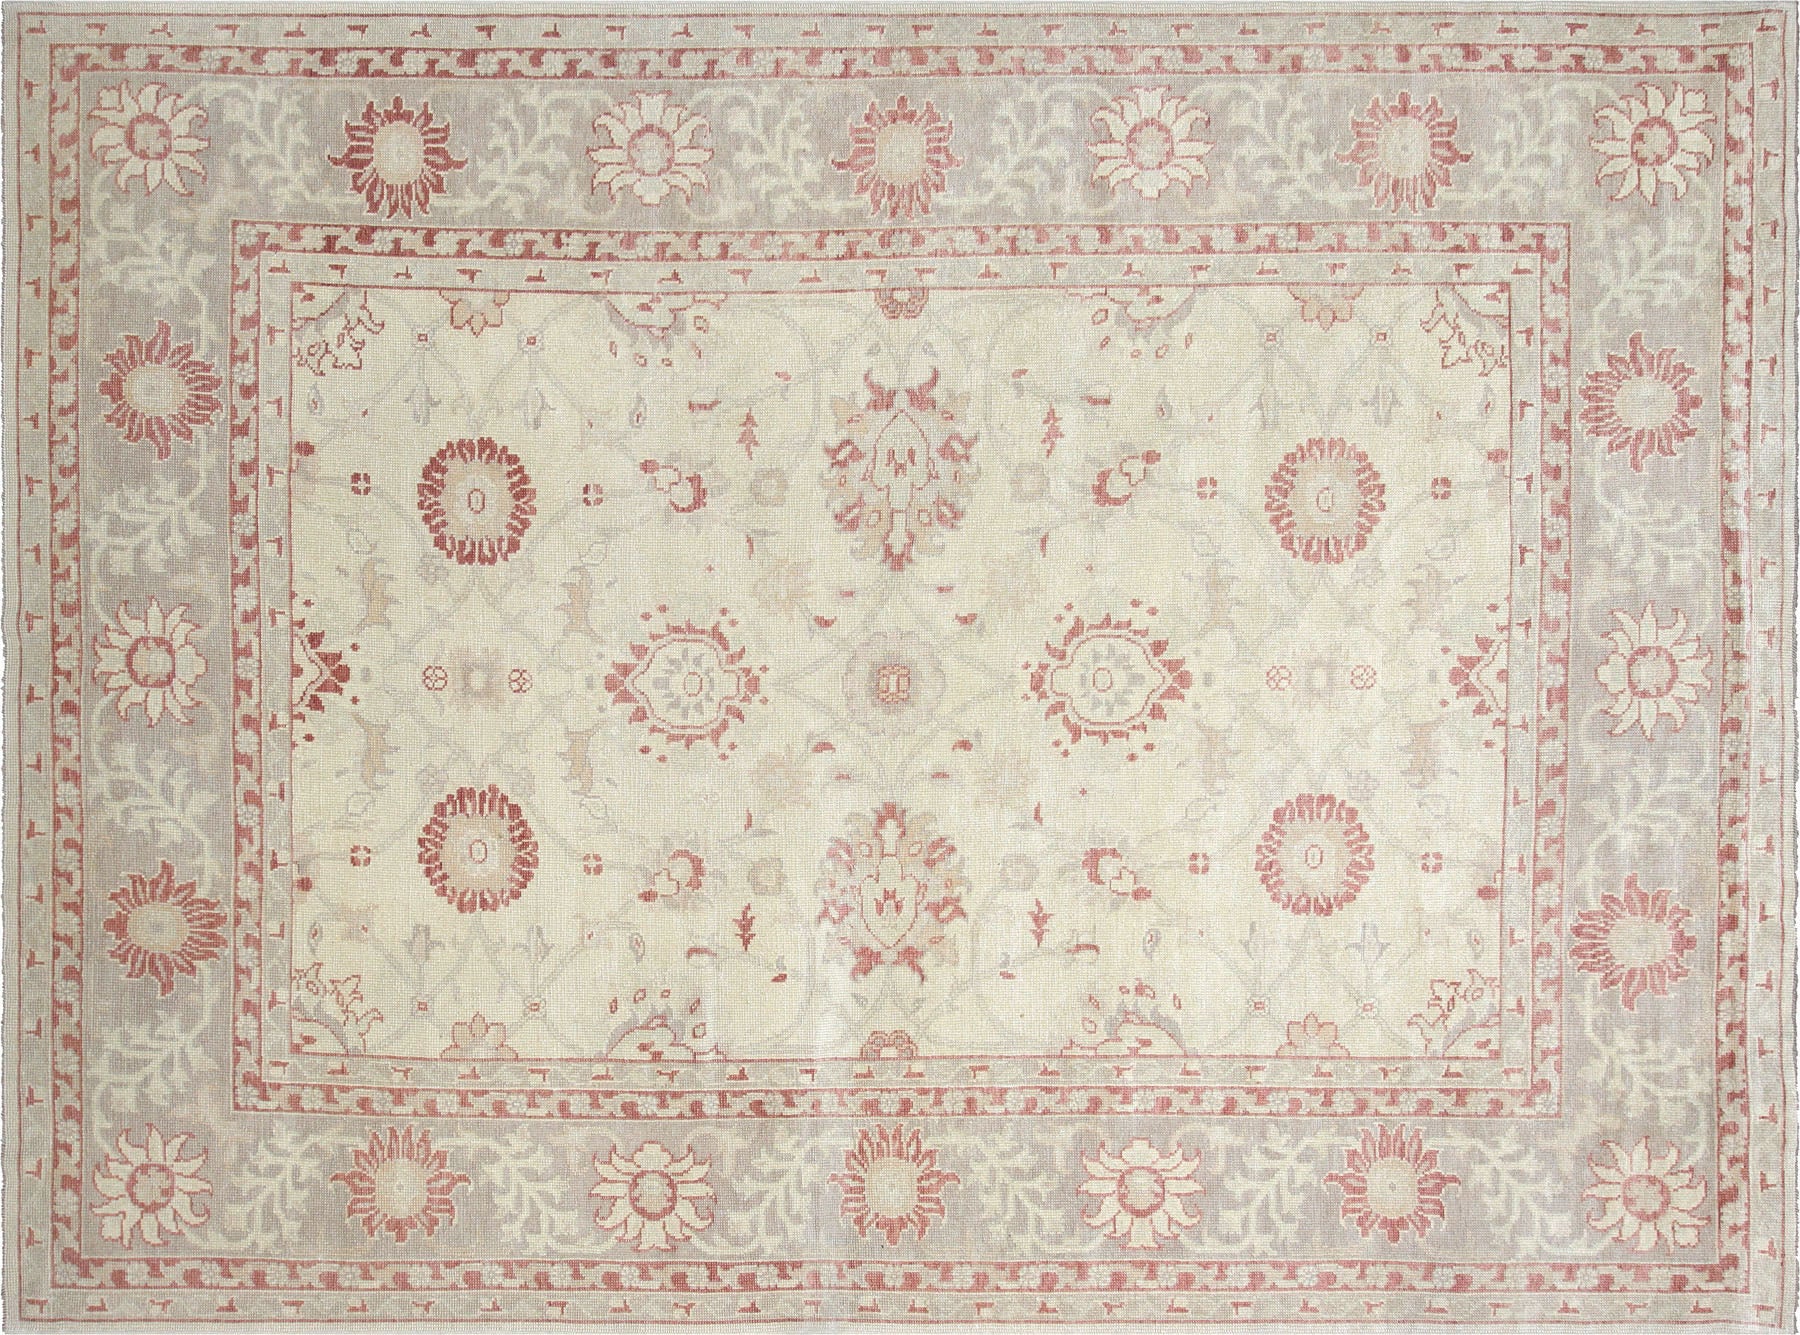 Recently Woven Turkish Oushak Carpet - 9'2" x 12'5"